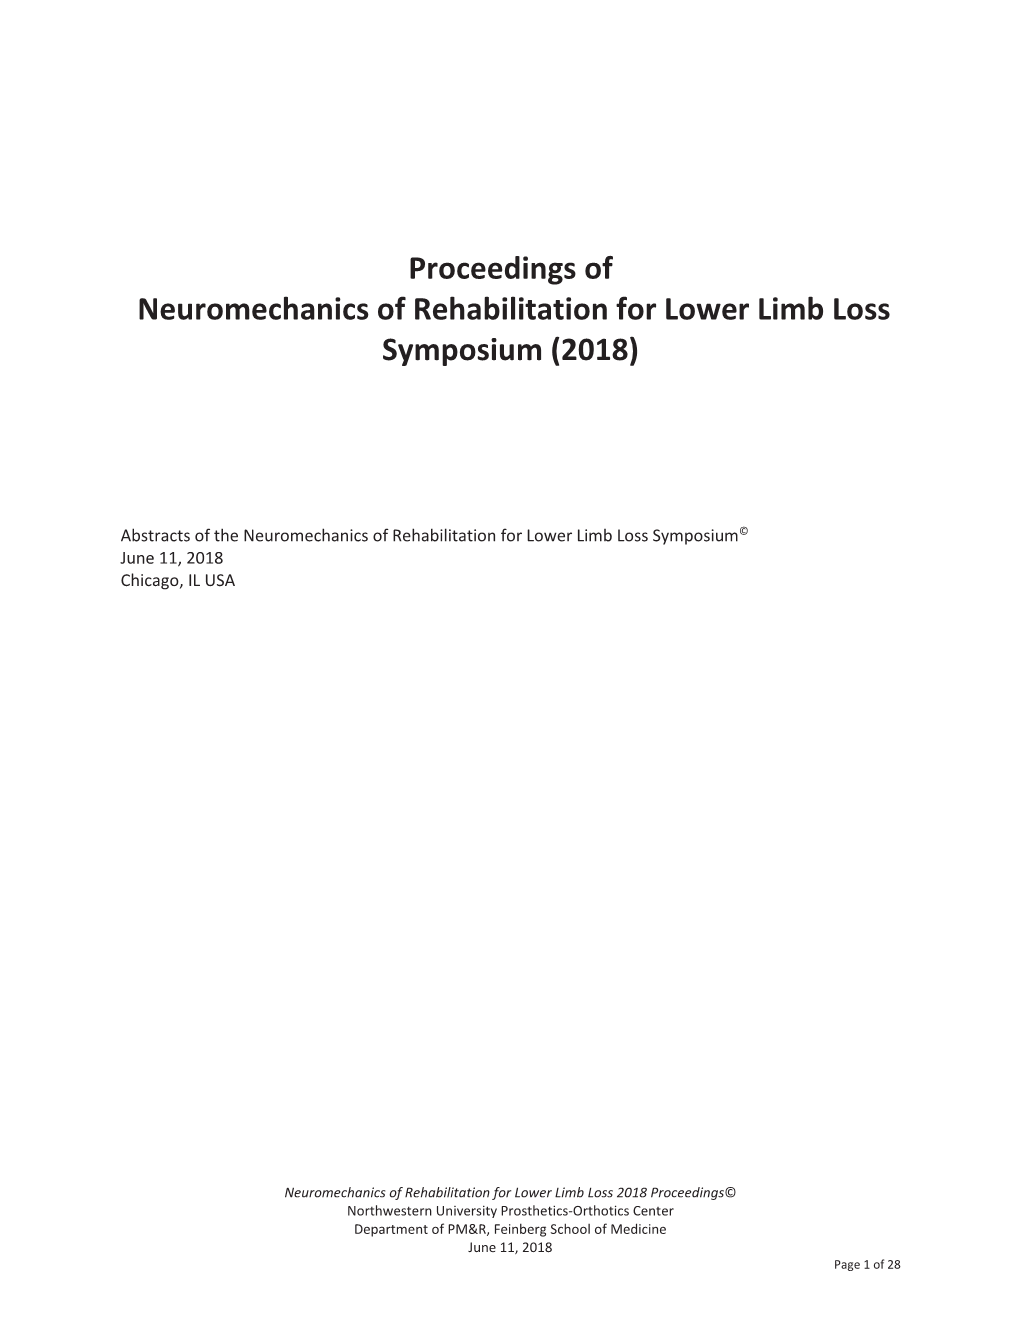 Neuromechanics of Rehabilitation for Lower Limb Loss Symposium (2018)